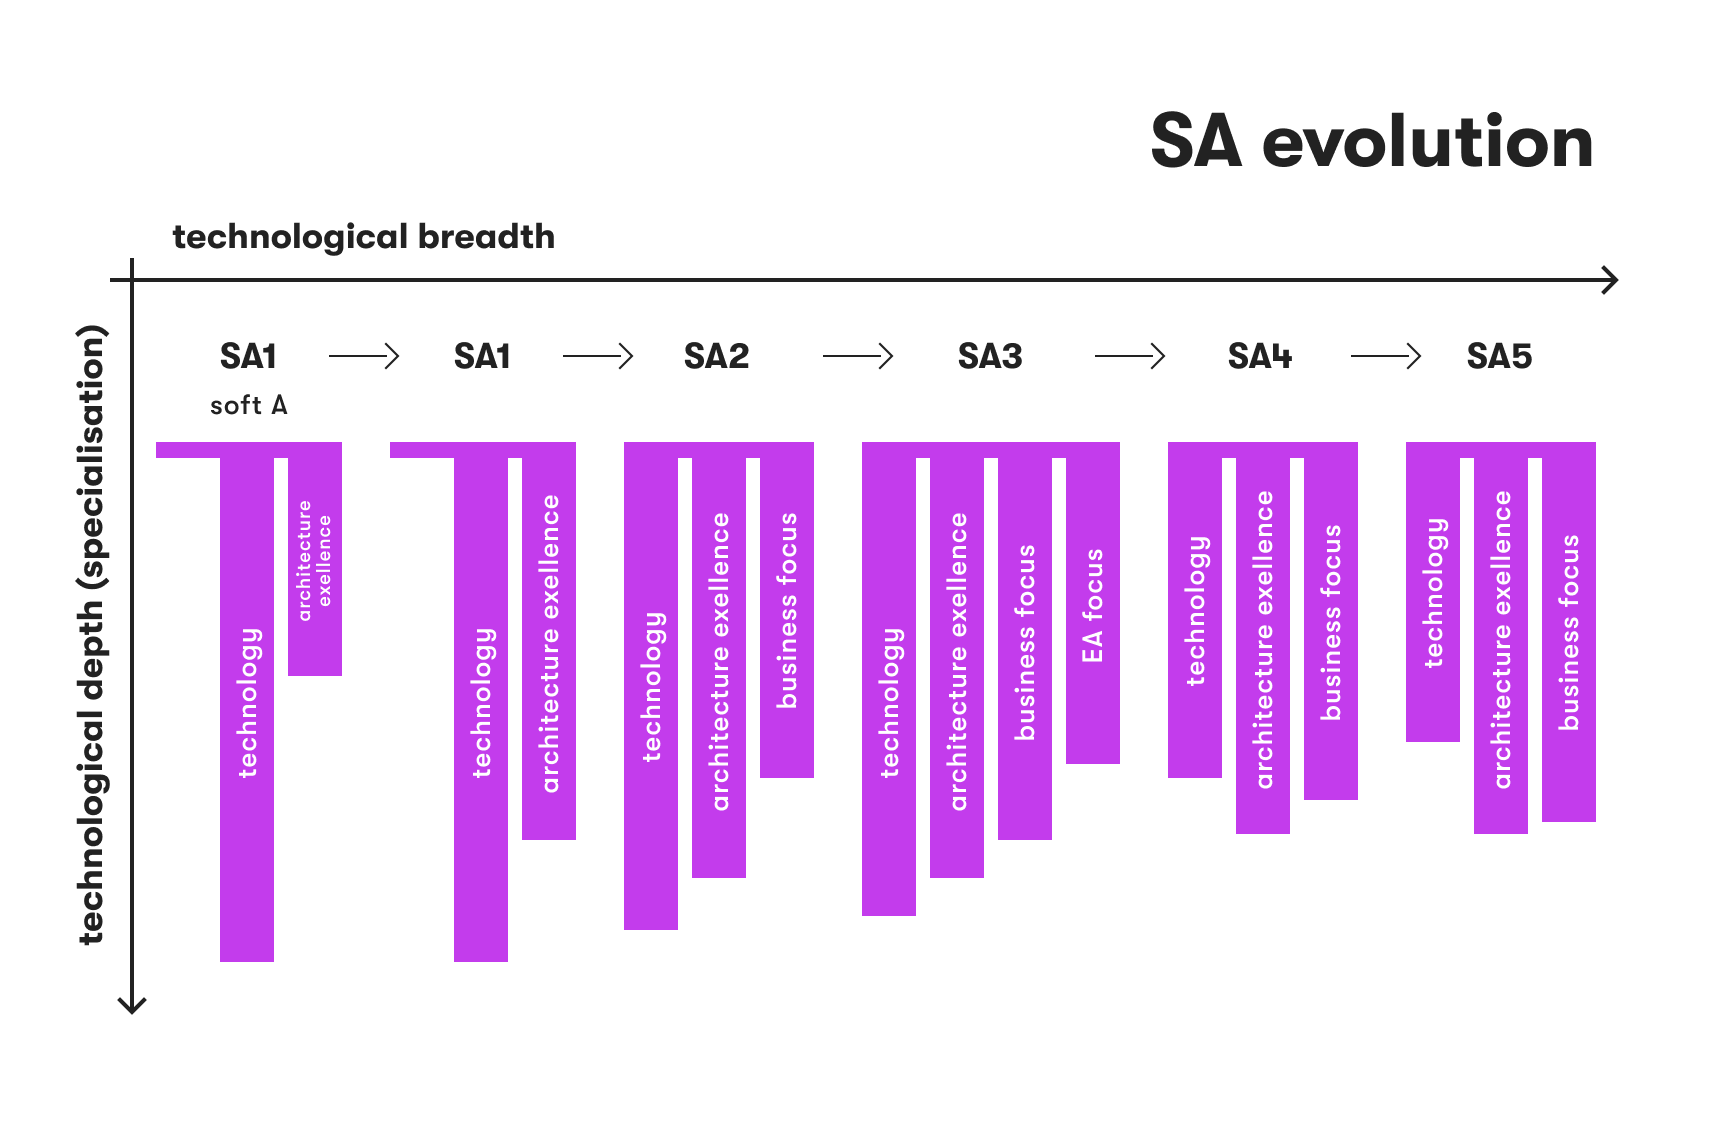 SA evolution illustration